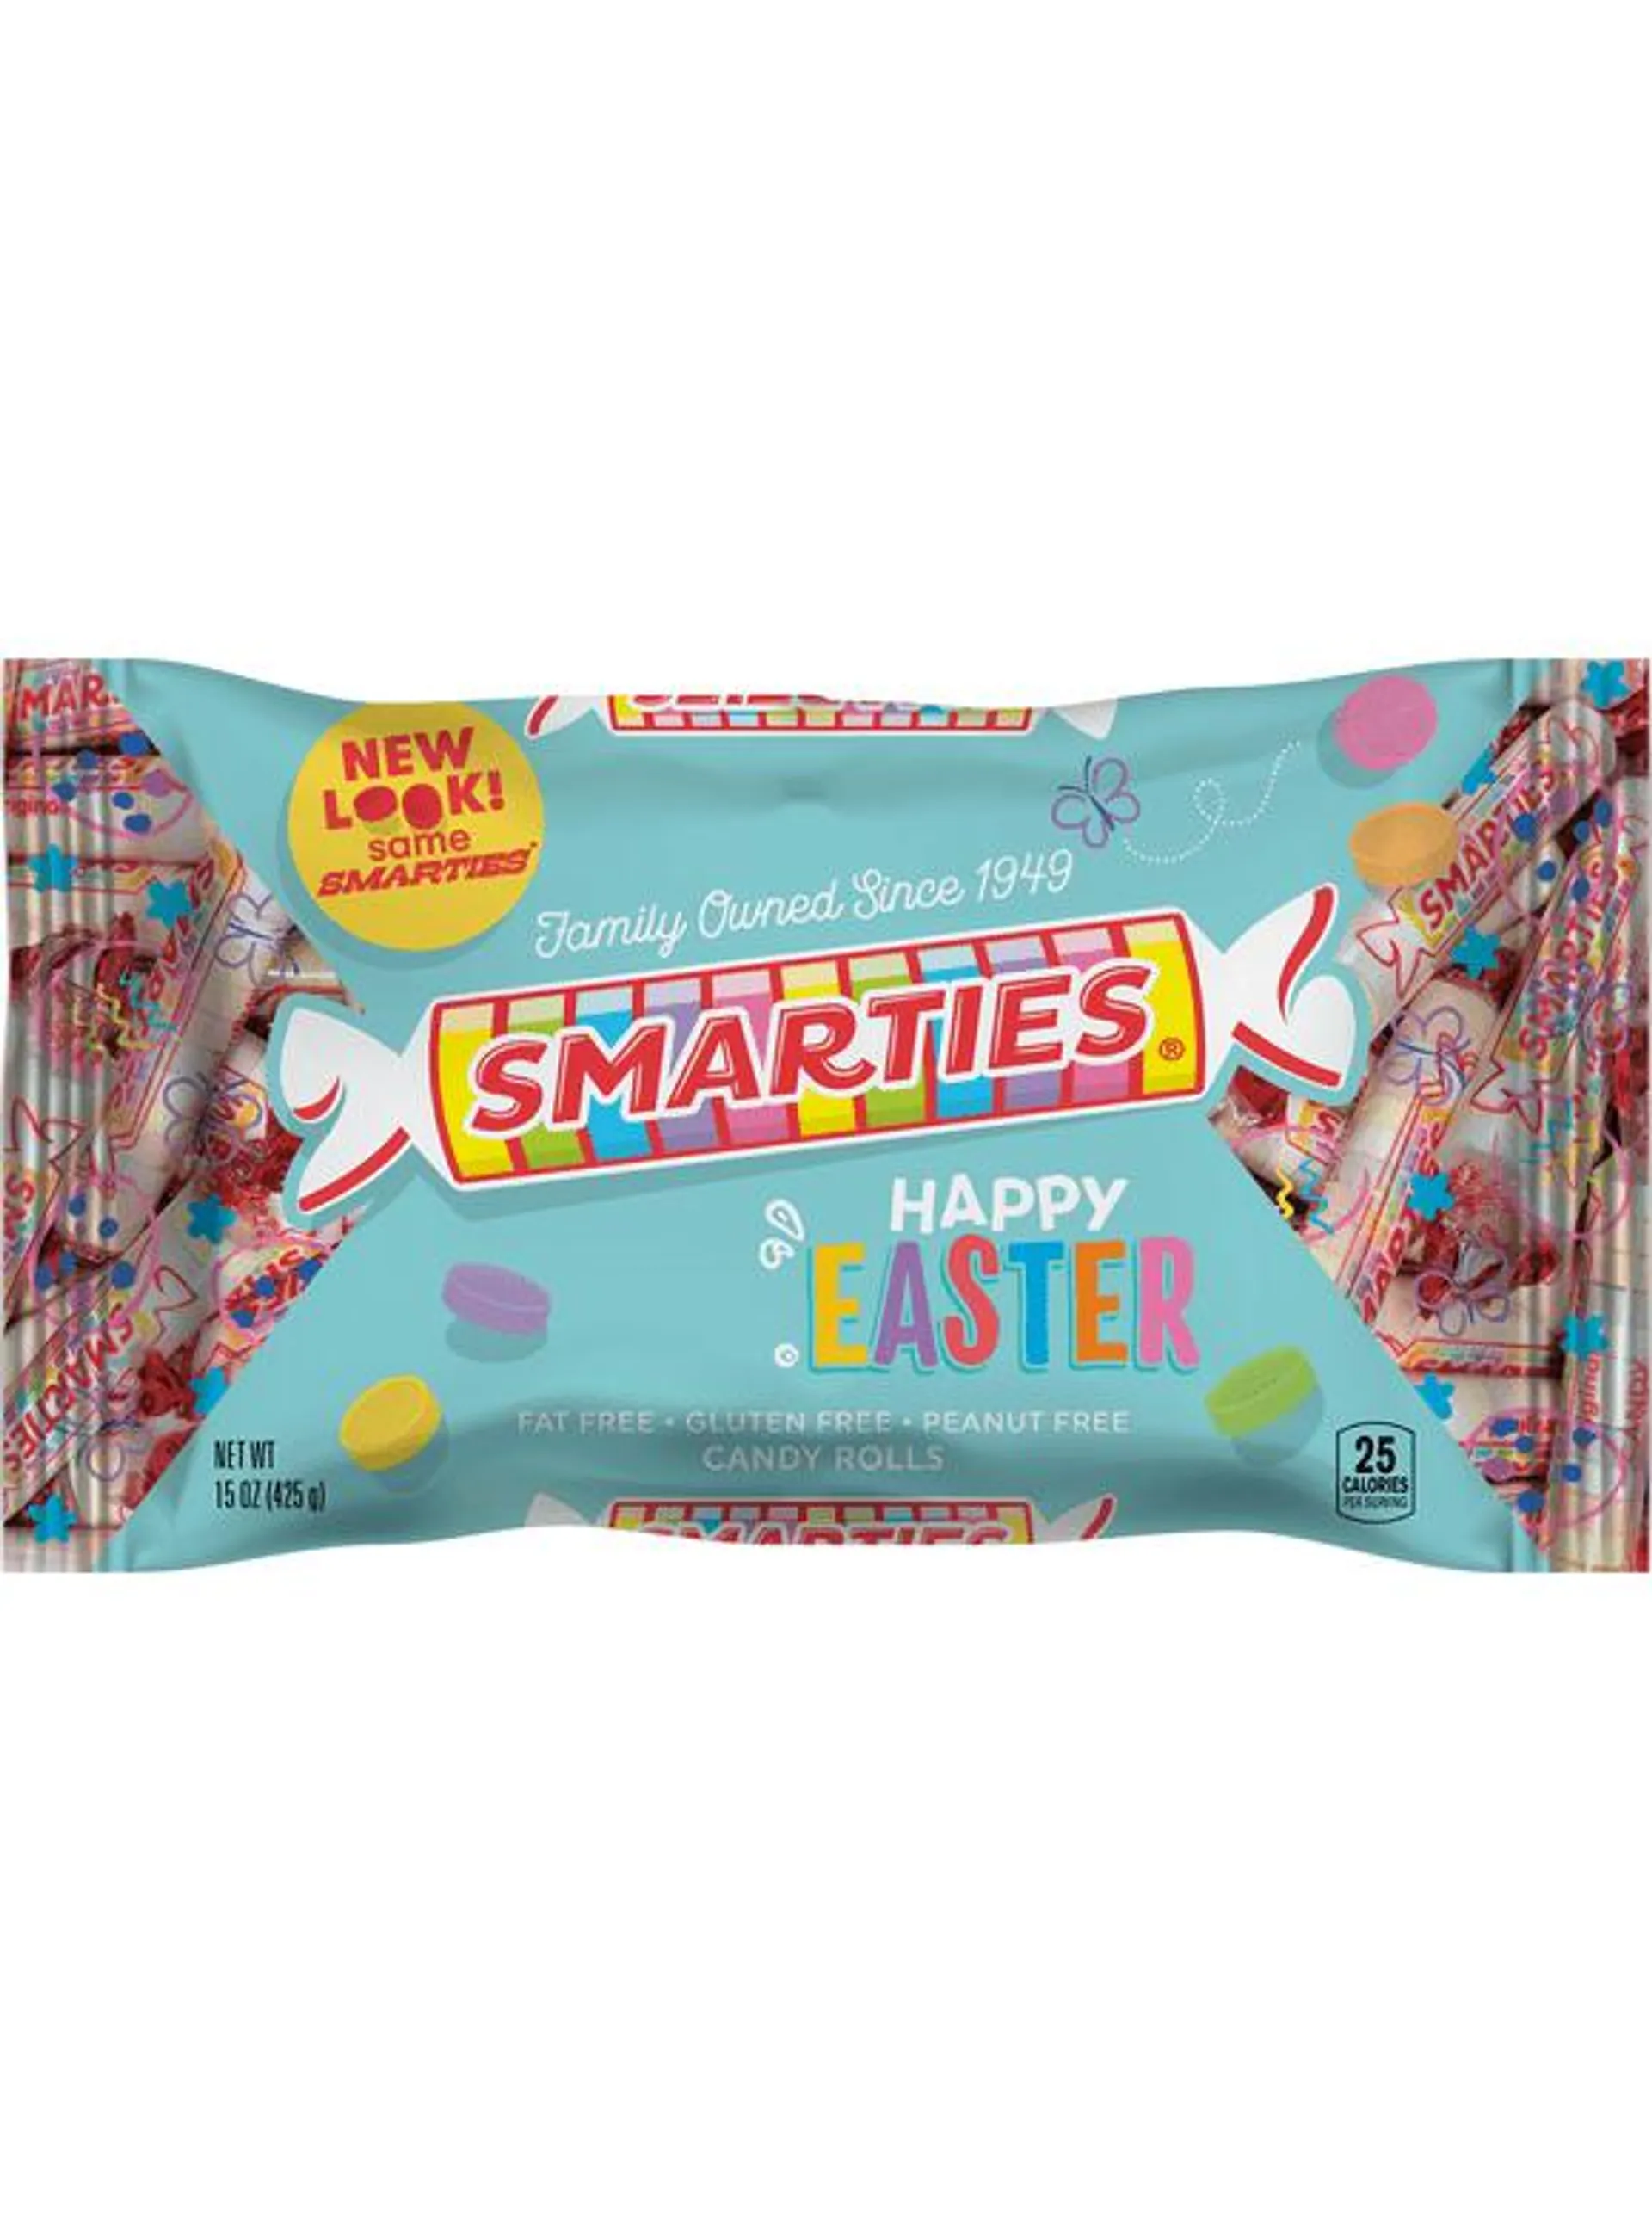 Smarties Original Easter Candy Rolls, 15 oz